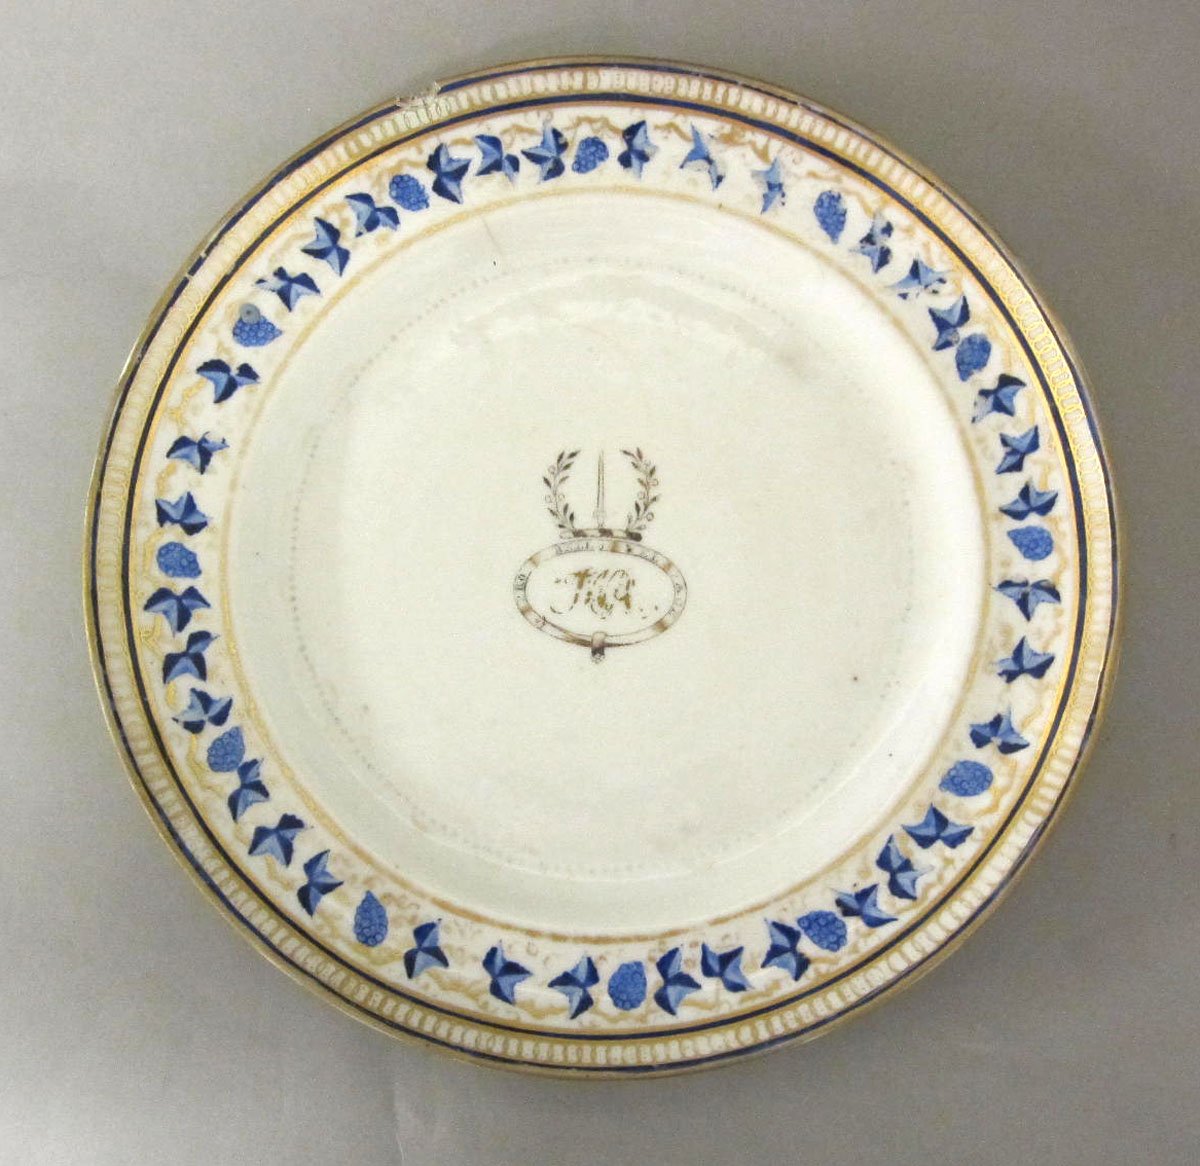 1963.0842.002 Porcelain plate